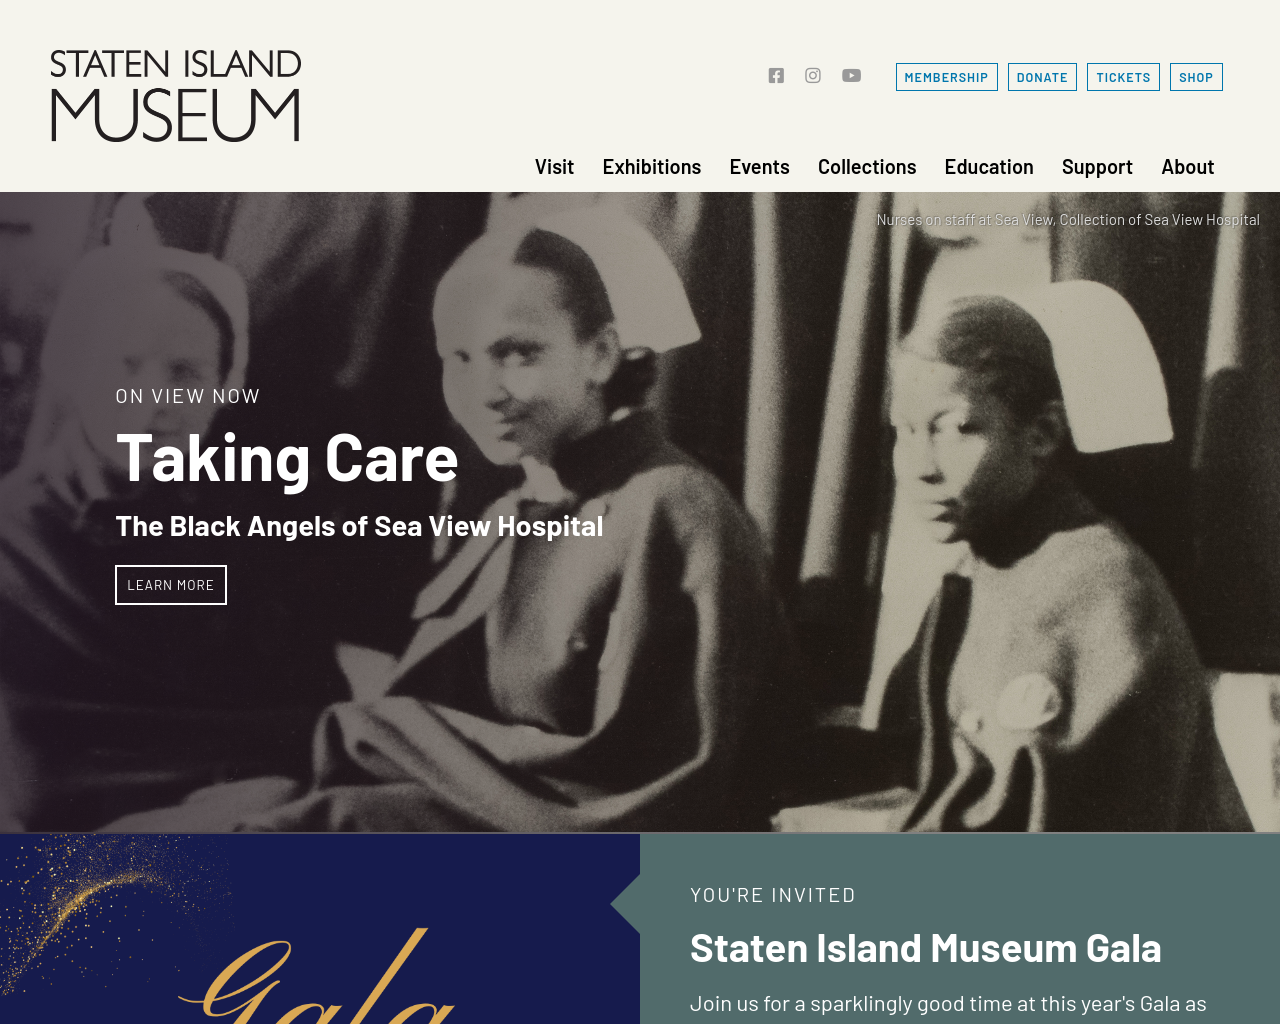 statenislandmuseum.org